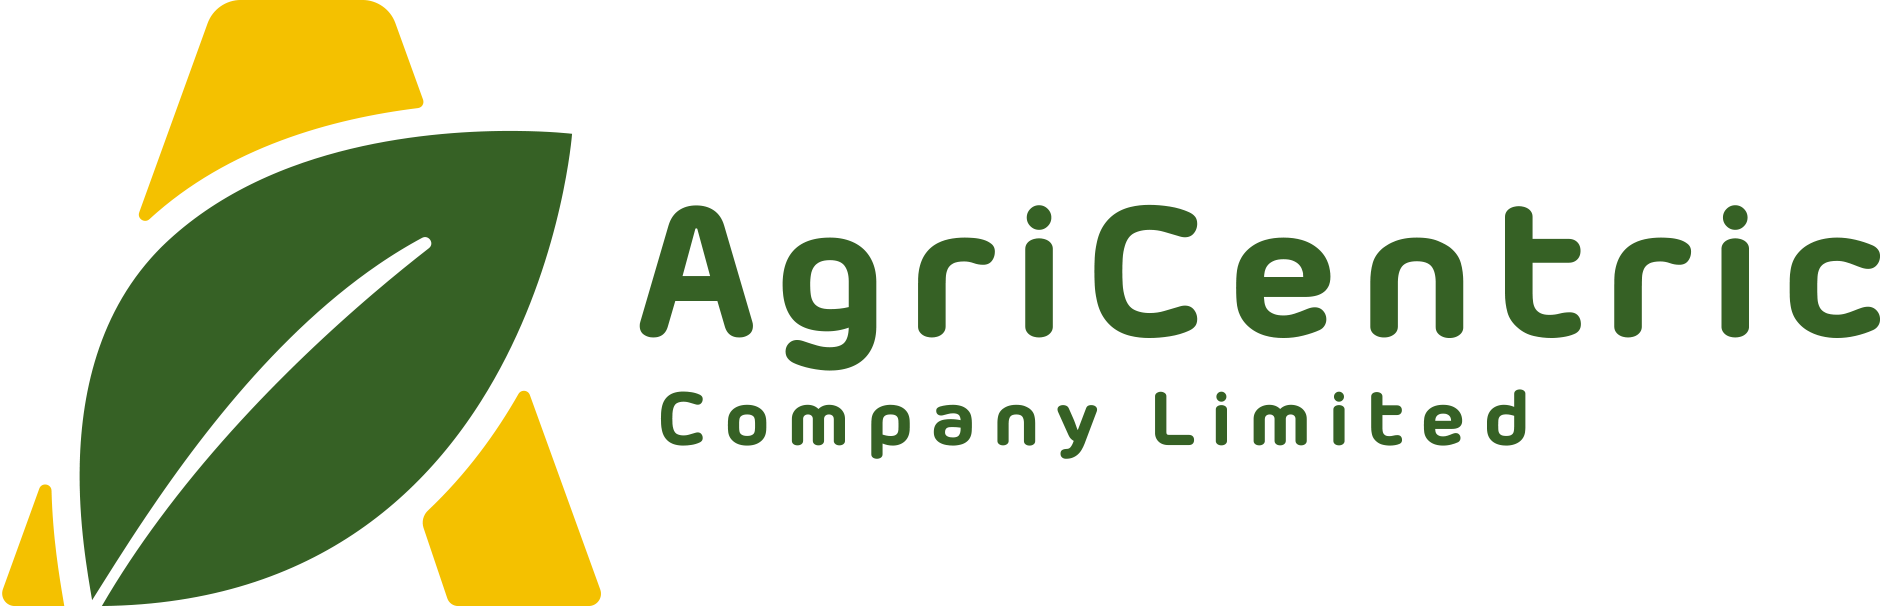 Agricentric Ltd